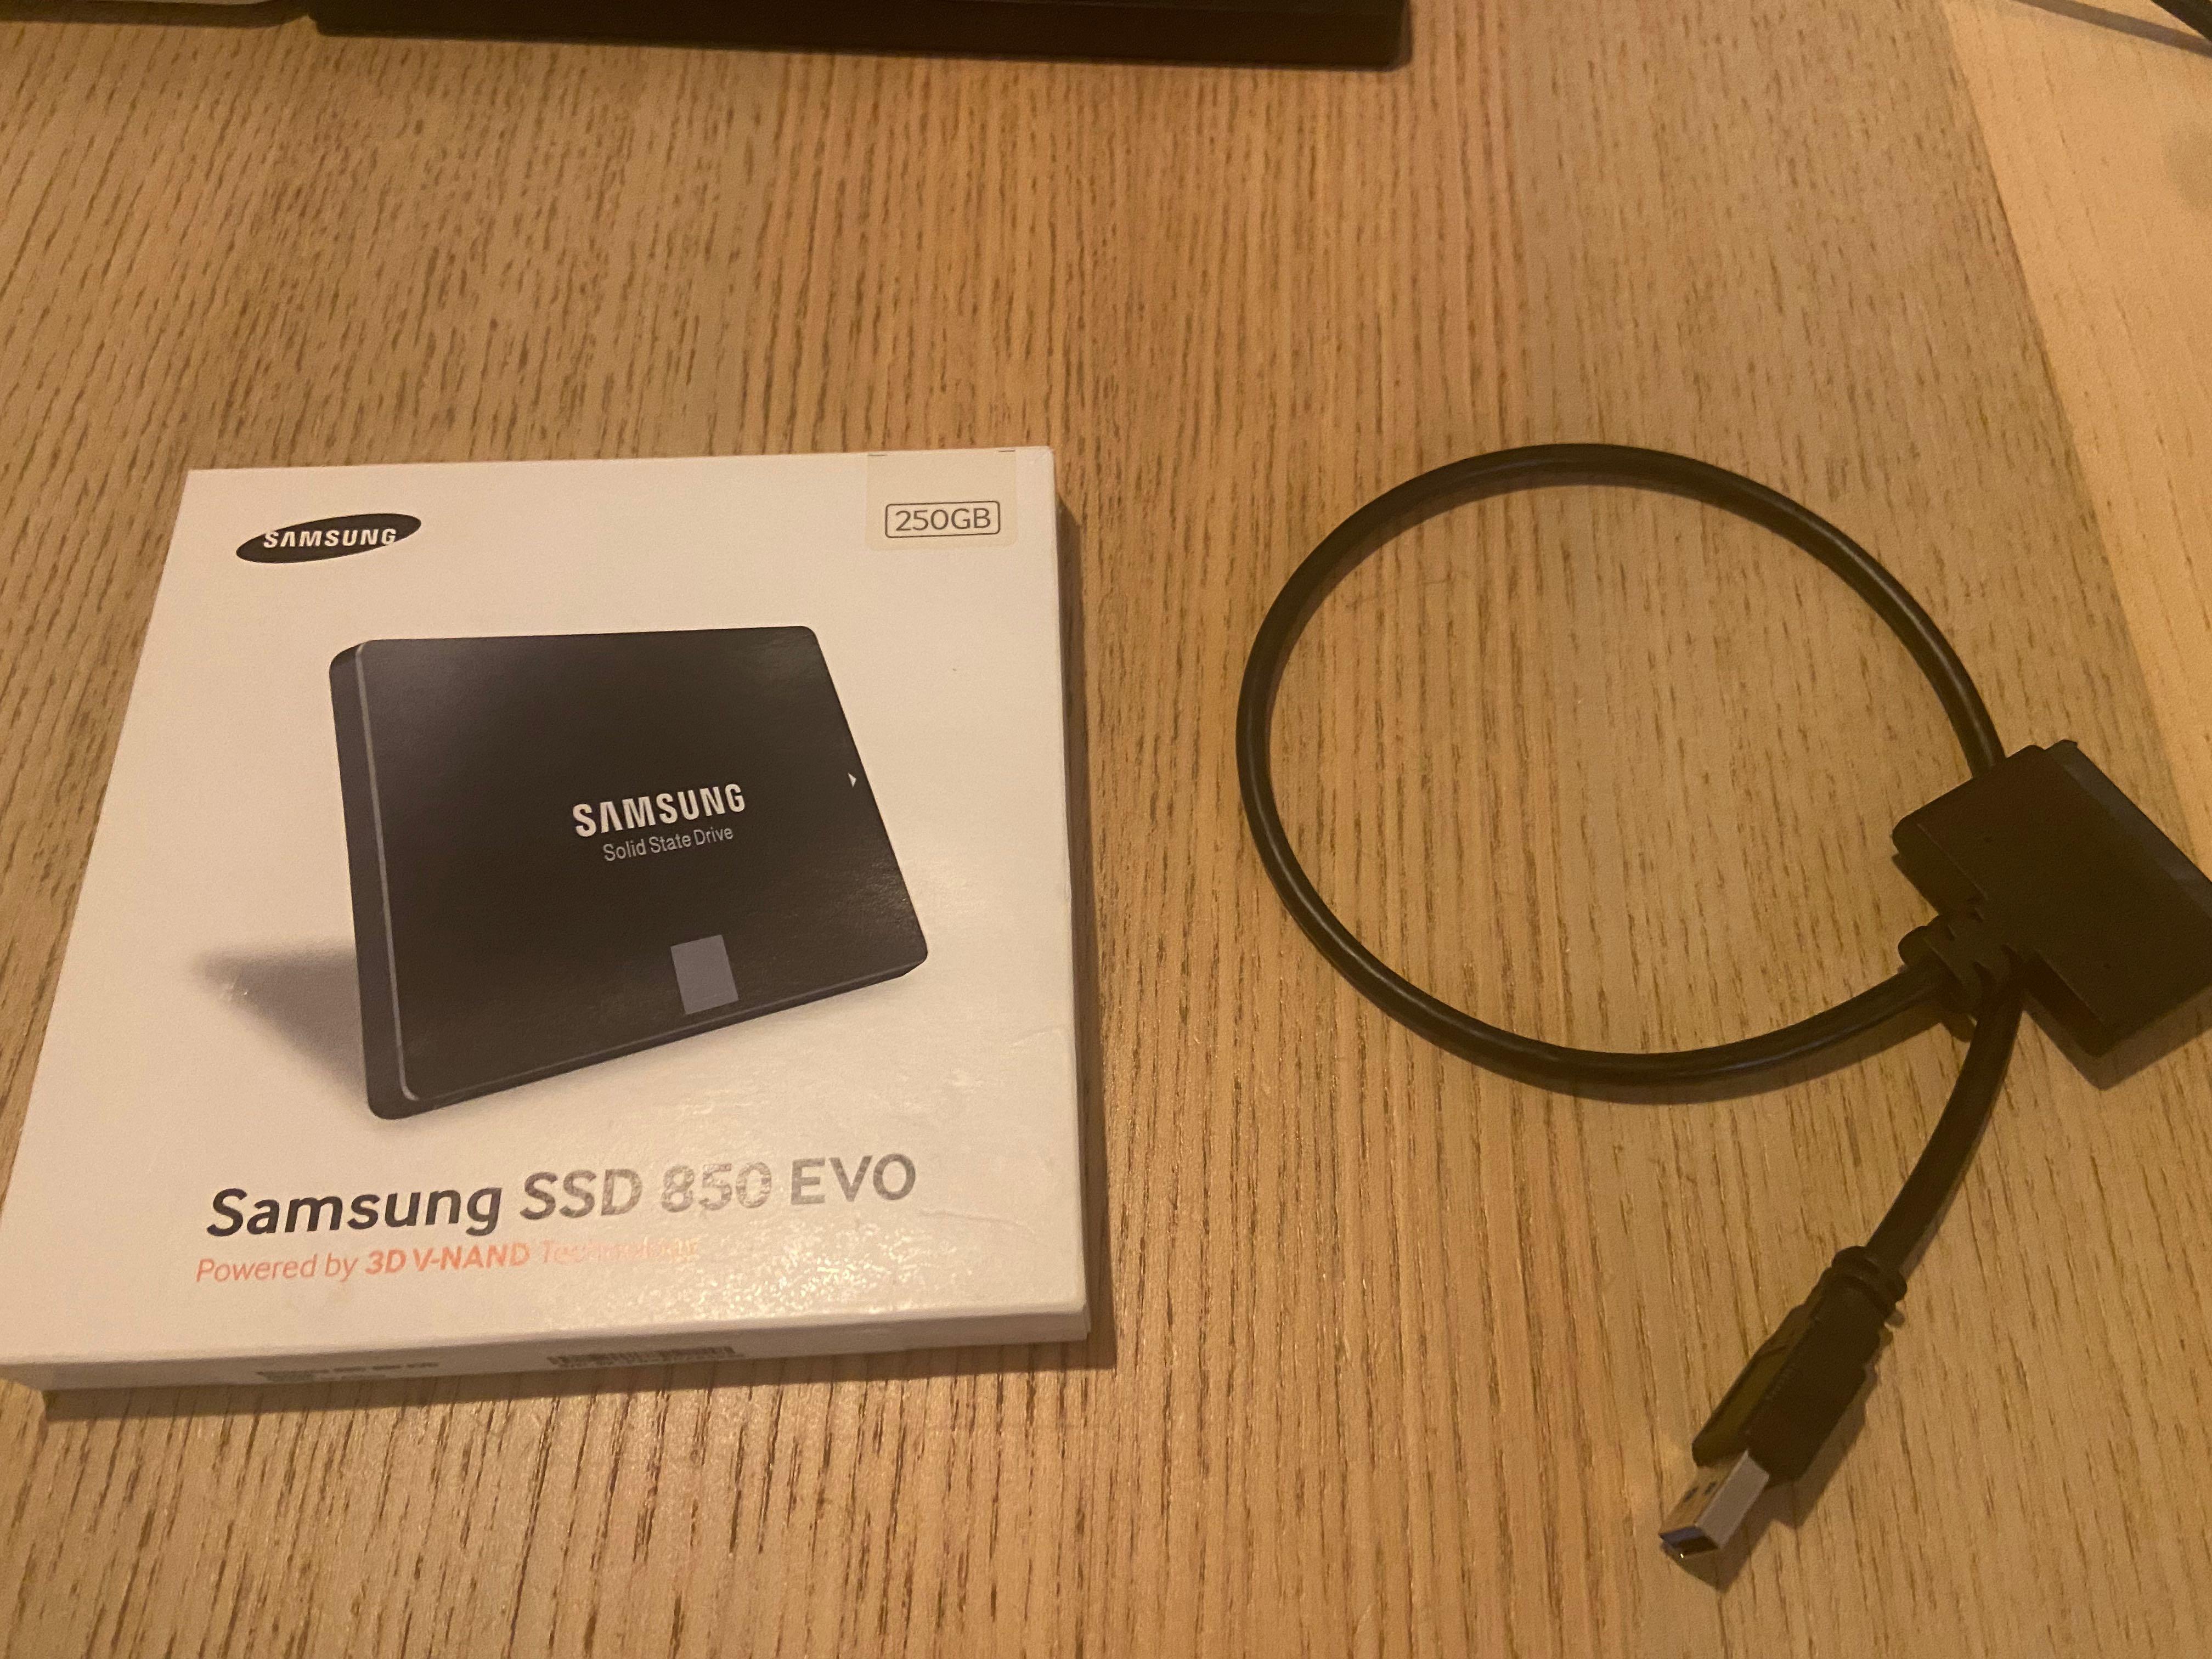 Samsung SSD 850 EVO 250GB + 電腦＆科技, 電腦周邊及配件, 硬碟及儲存器- Carousell